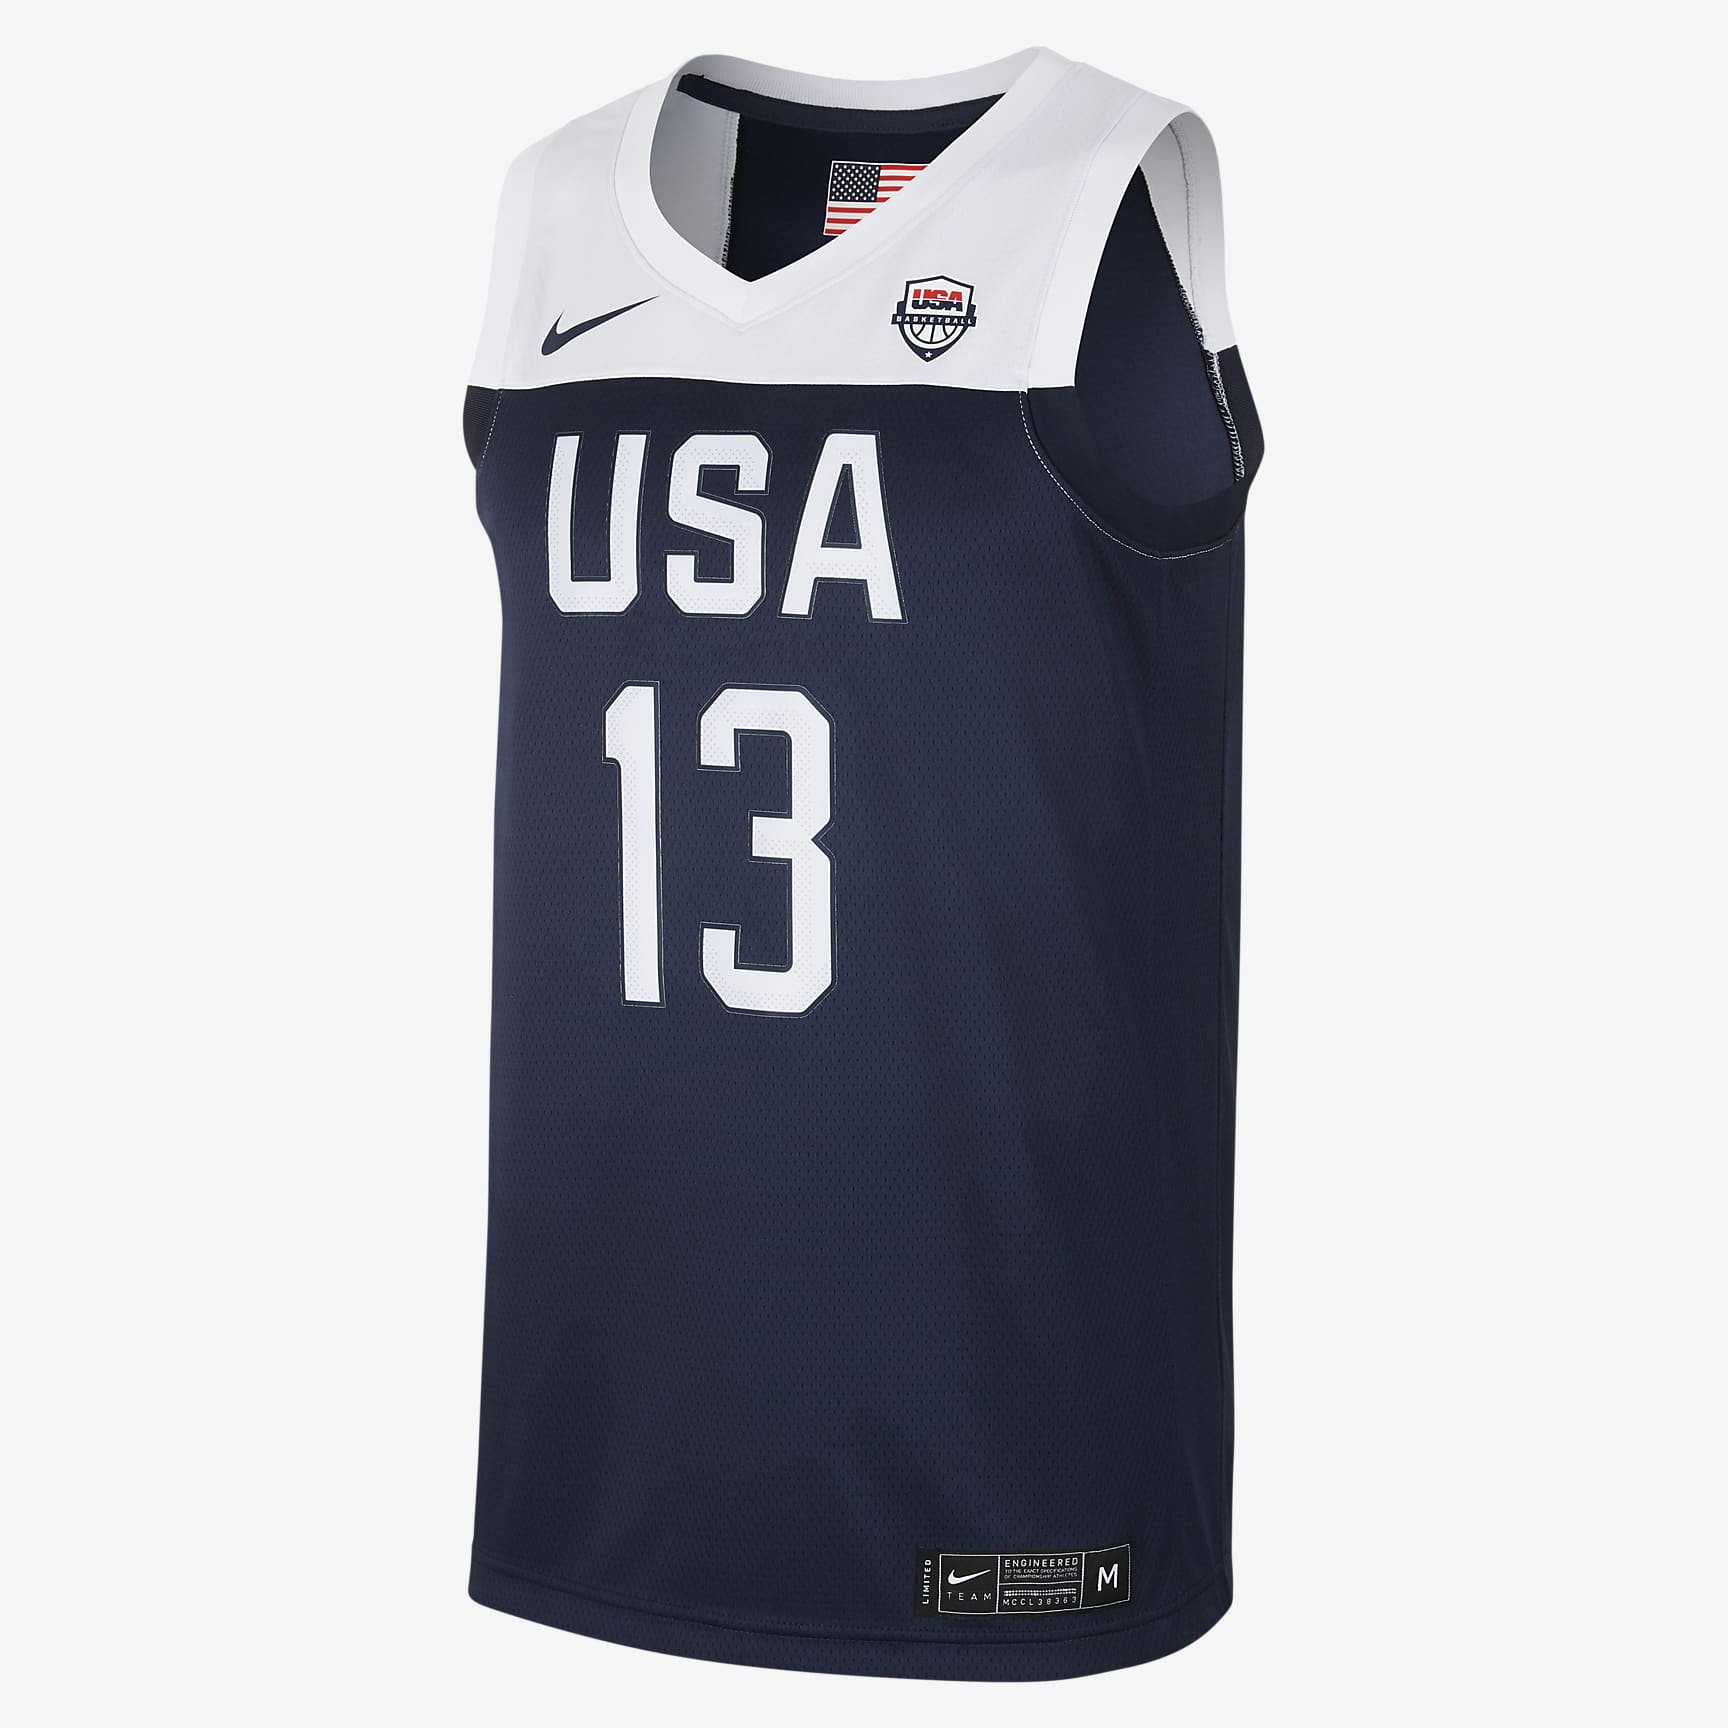 USA Nike (Road) Men's Basketball Jersey. Nike IL